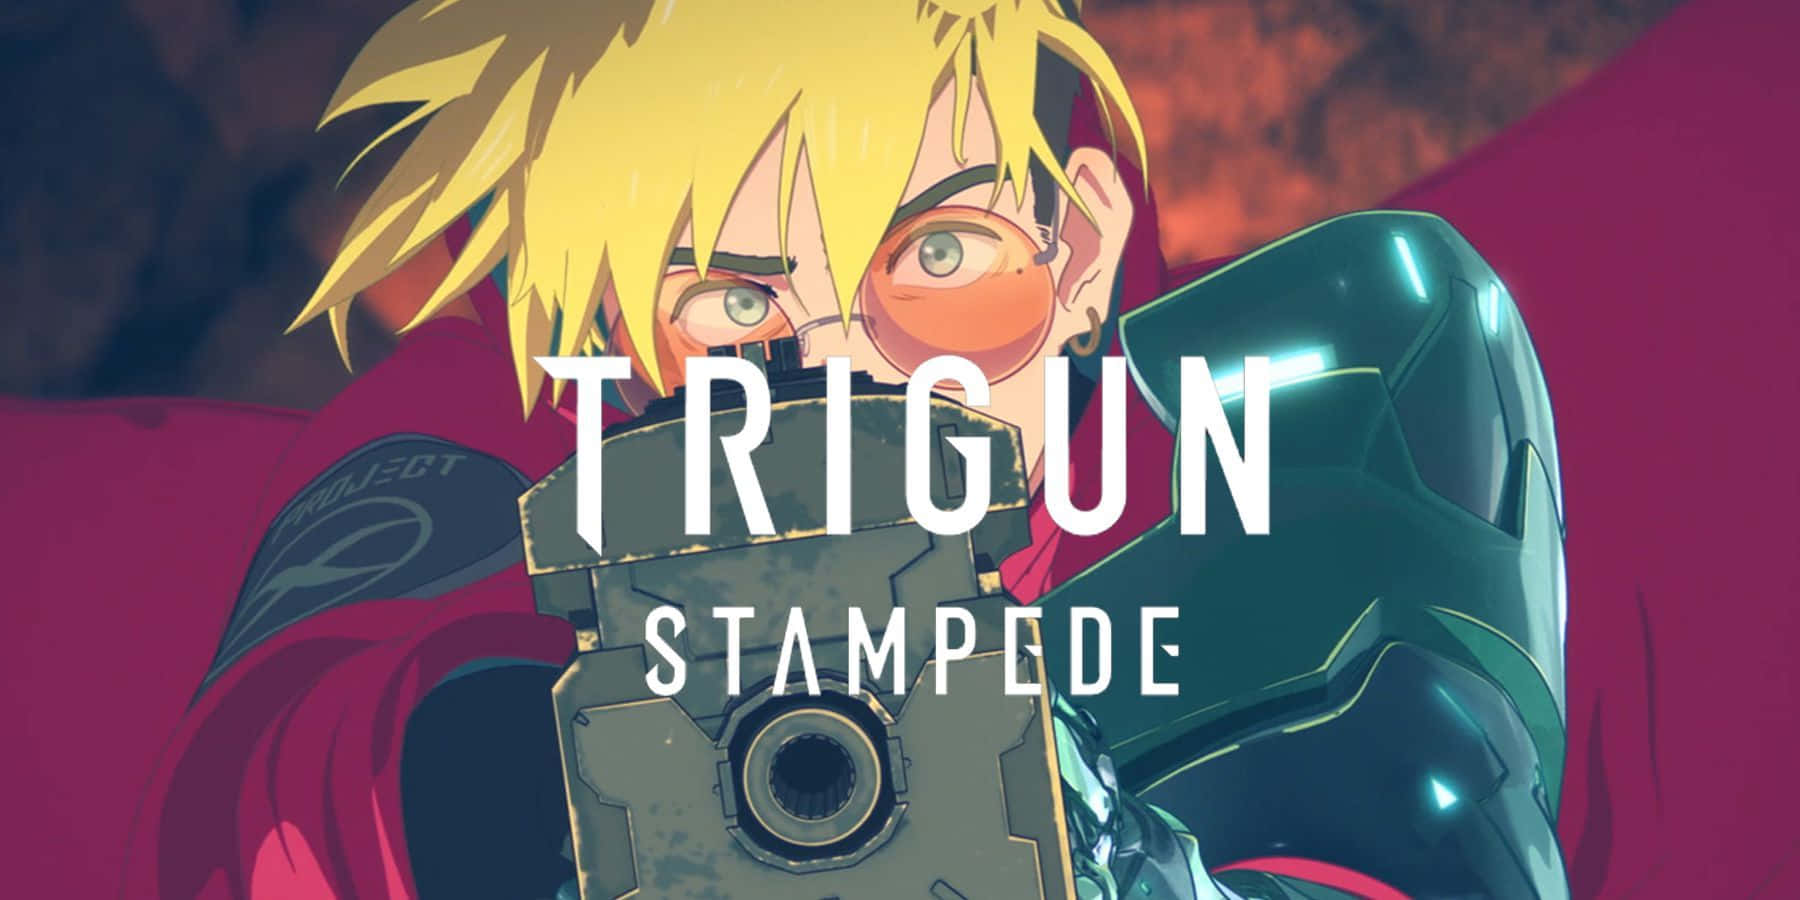 Vash the Stampede, anti-hero of the anime series Trigun.